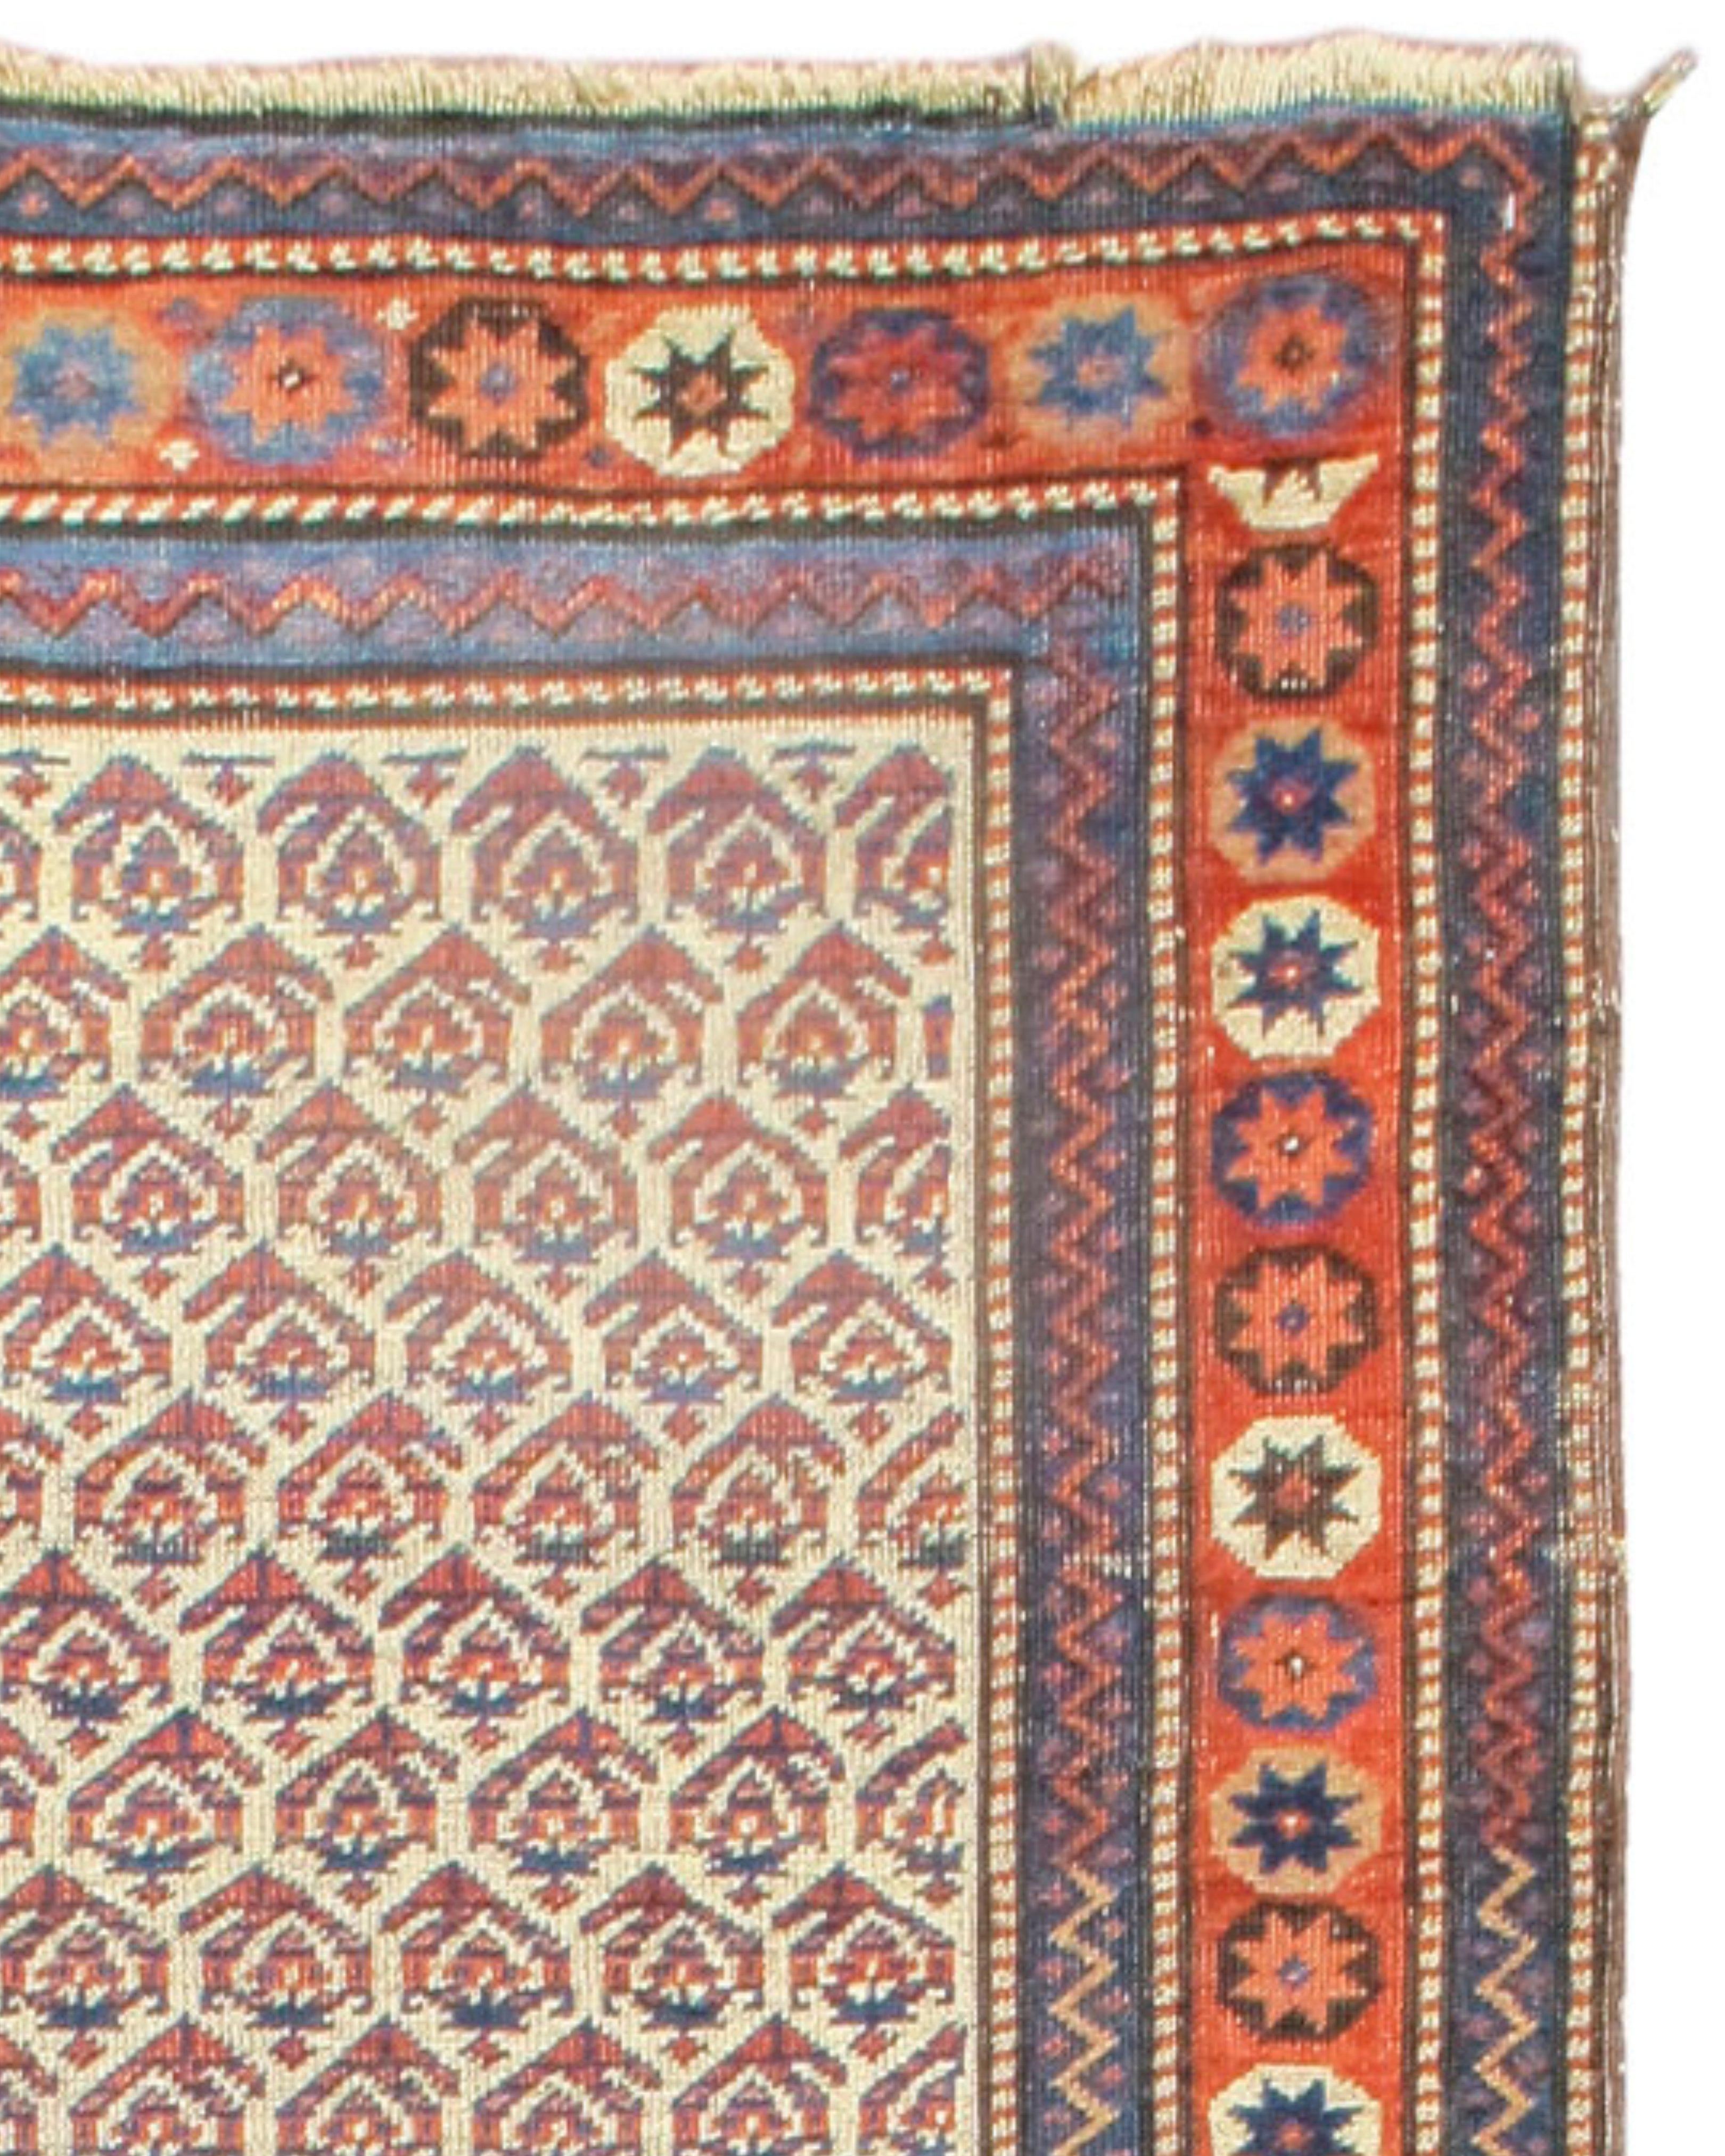 Antique Northwest Persian Runner Rug, c. 1900

Additional Information:
Dimensions: 7'2